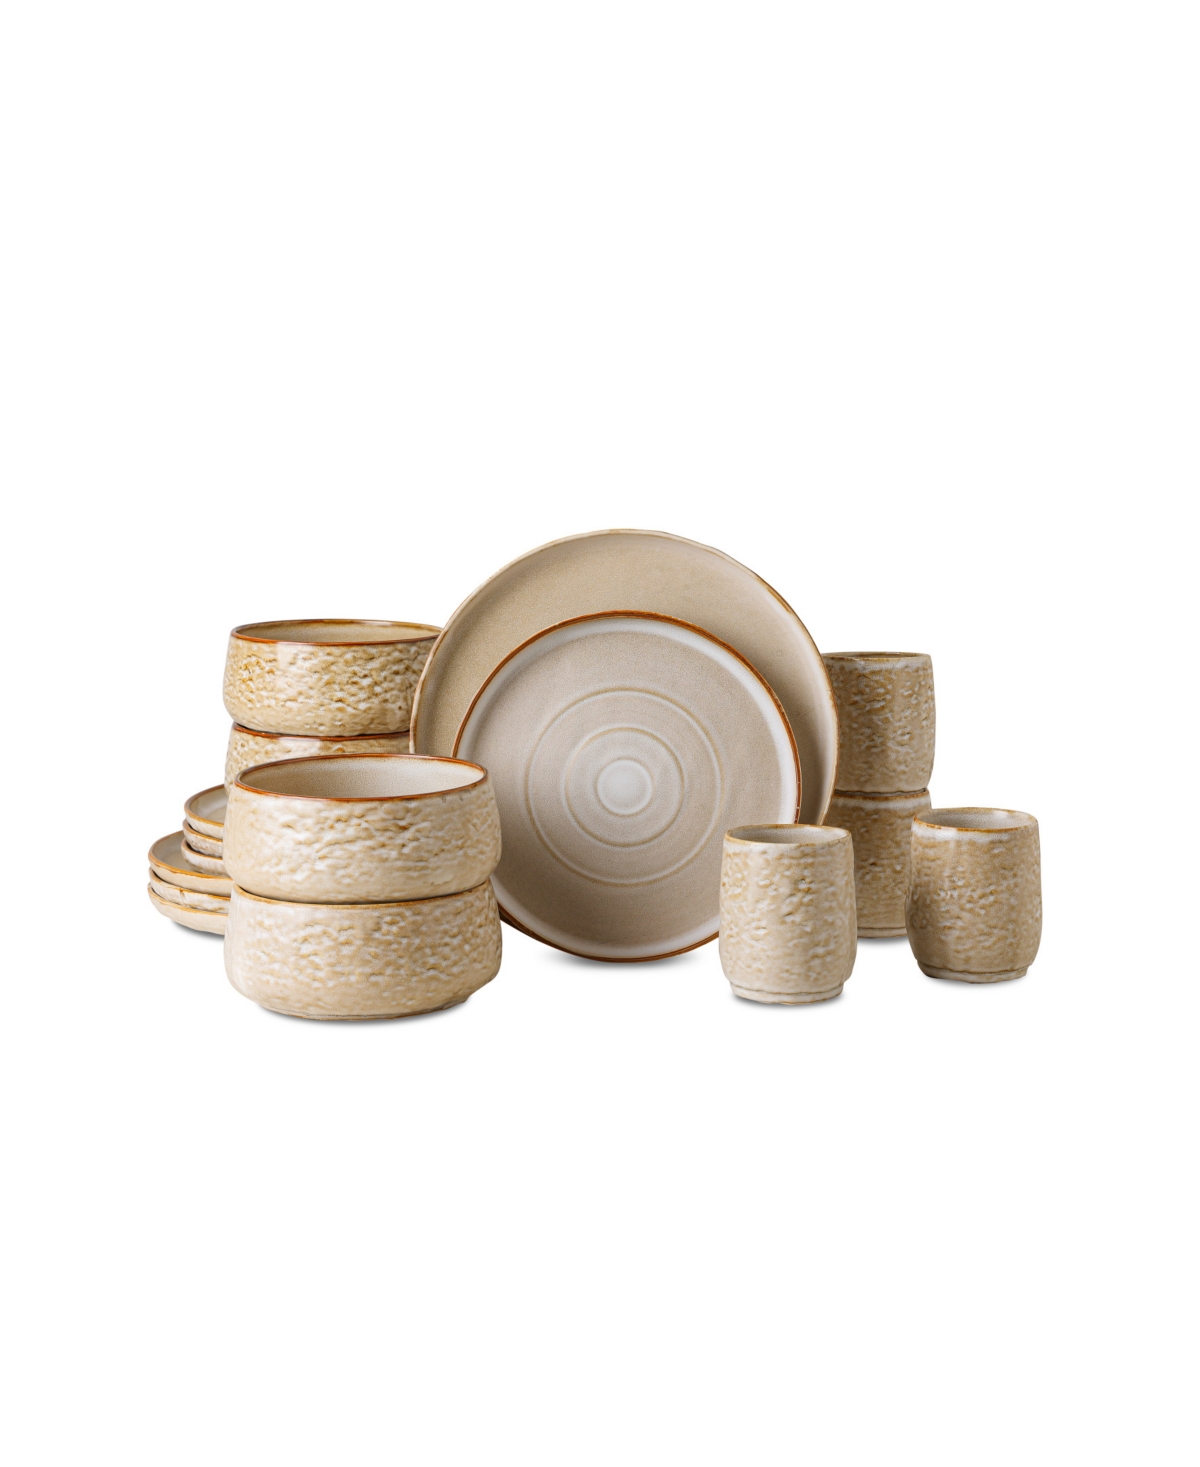 Shosai Stoneware 16 Pieces Dinnerware Set, Service for 4 - Sand